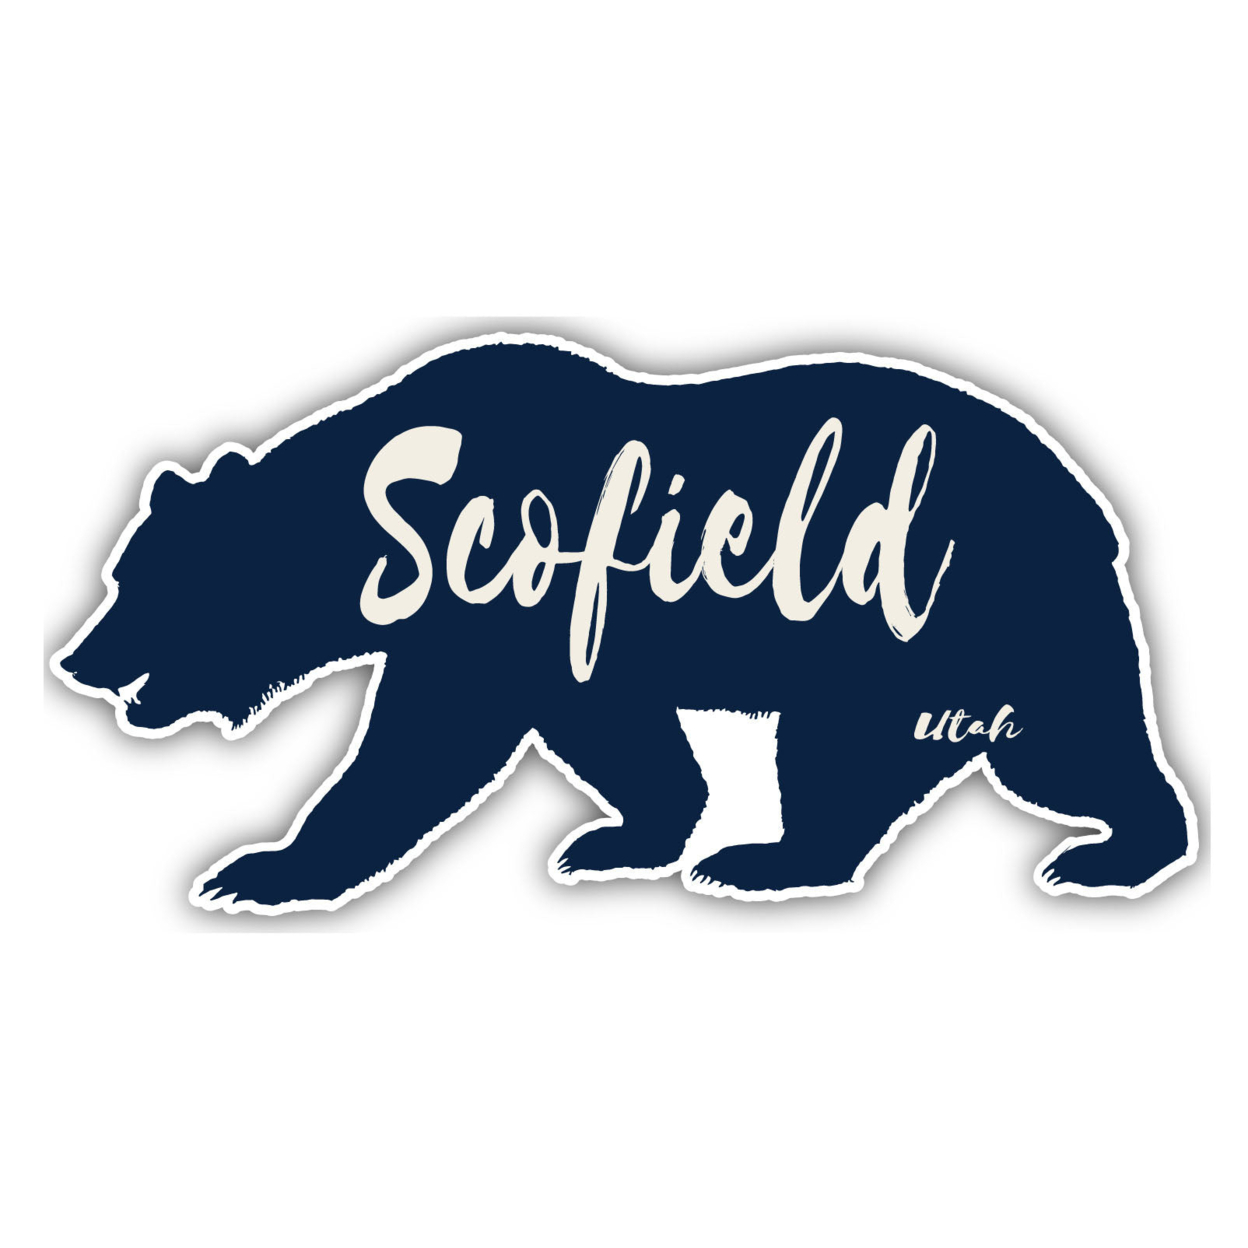 Scofield Utah Souvenir Decorative Stickers (Choose Theme And Size) - Single Unit, 2-Inch, Bear